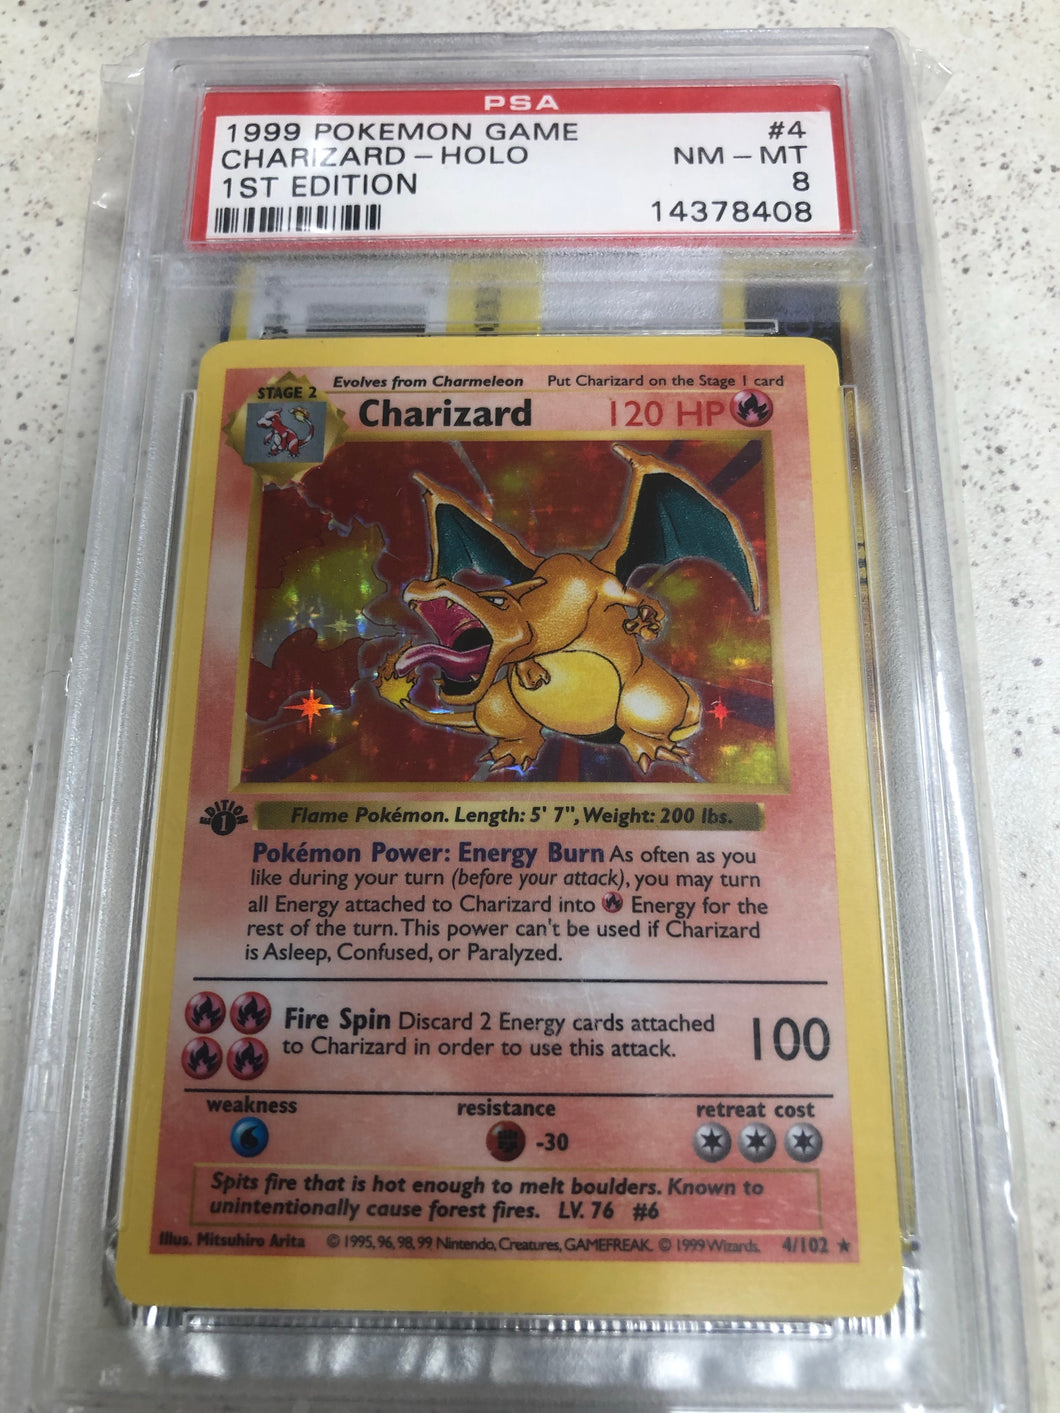 1999 Pokémon Game Charzard- Holo 1st Edition PSA8